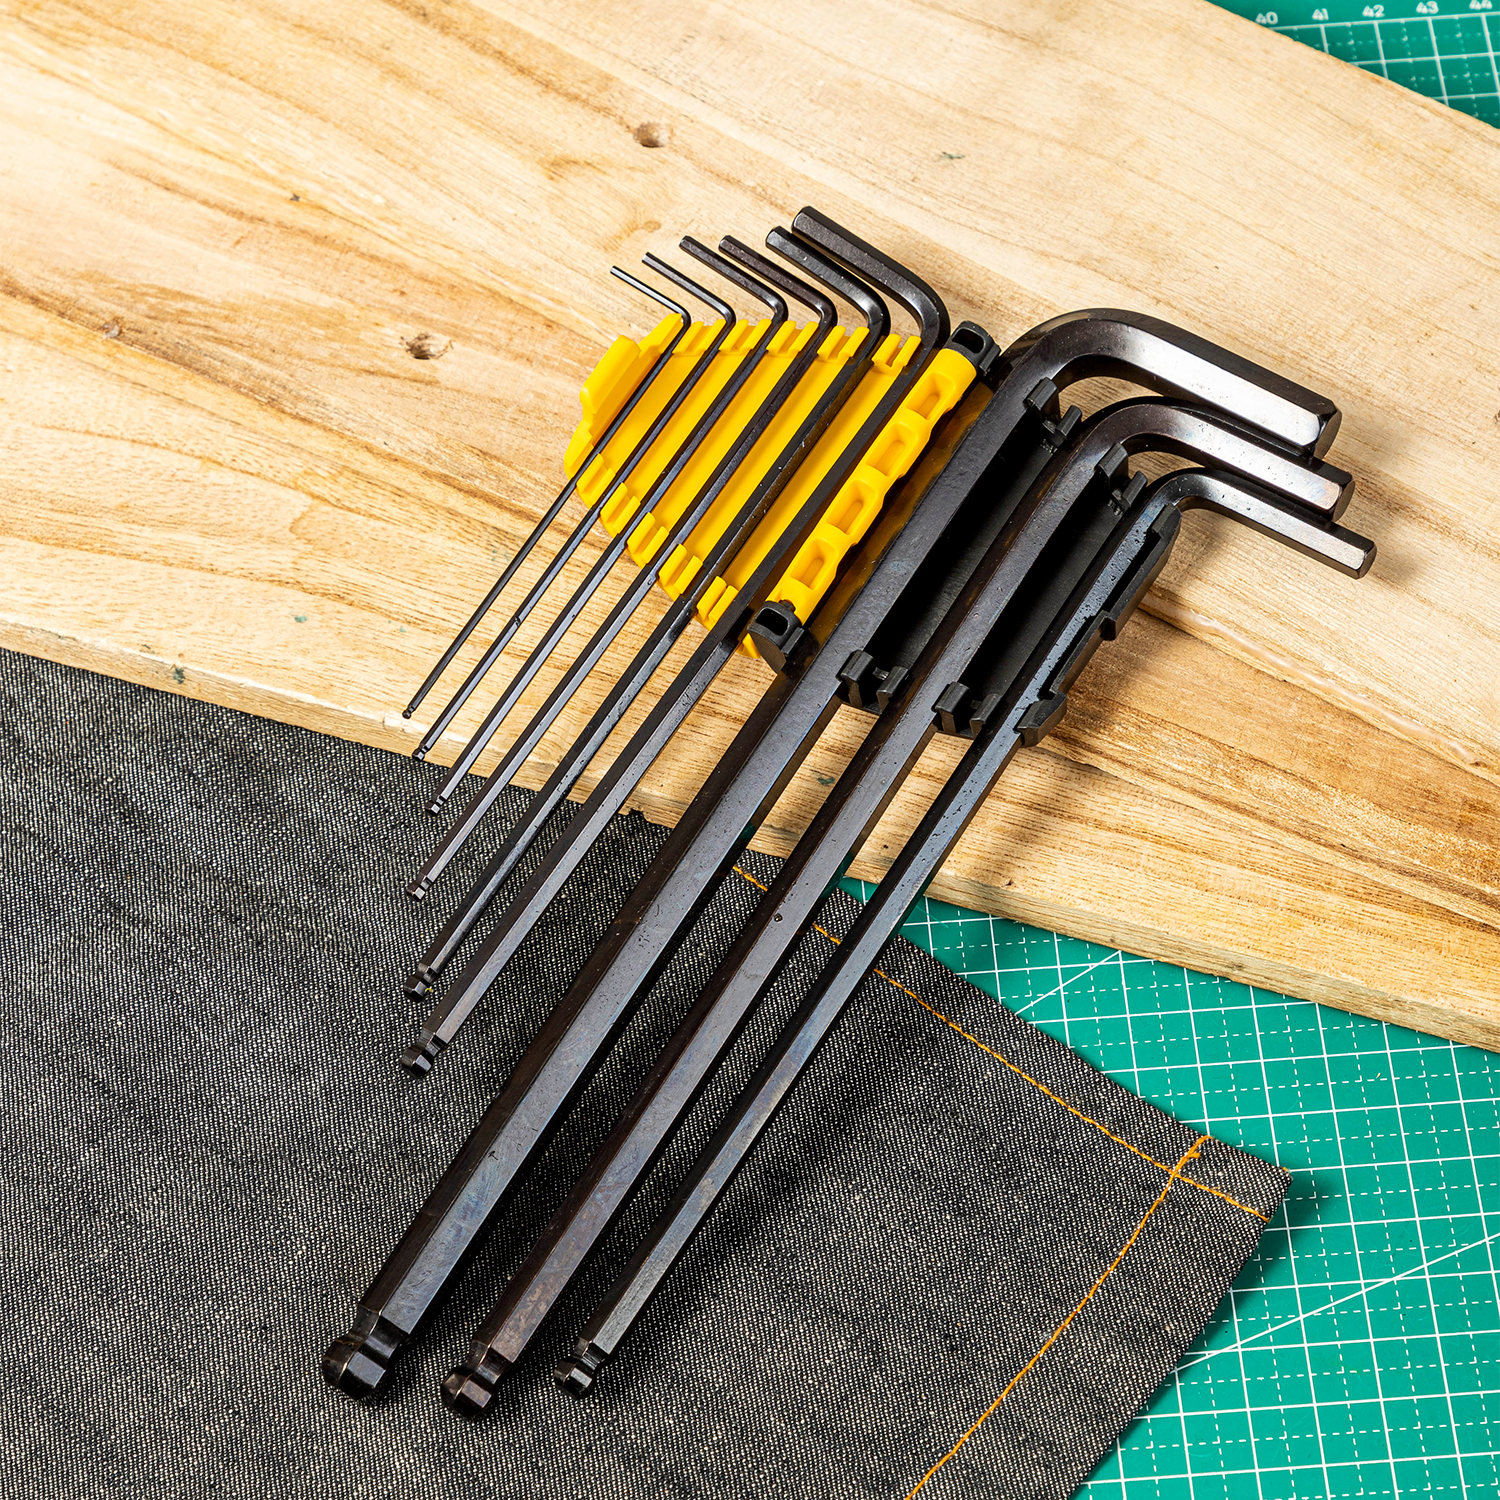 Craftsman long handle Hex Keys for Furniture Fitting